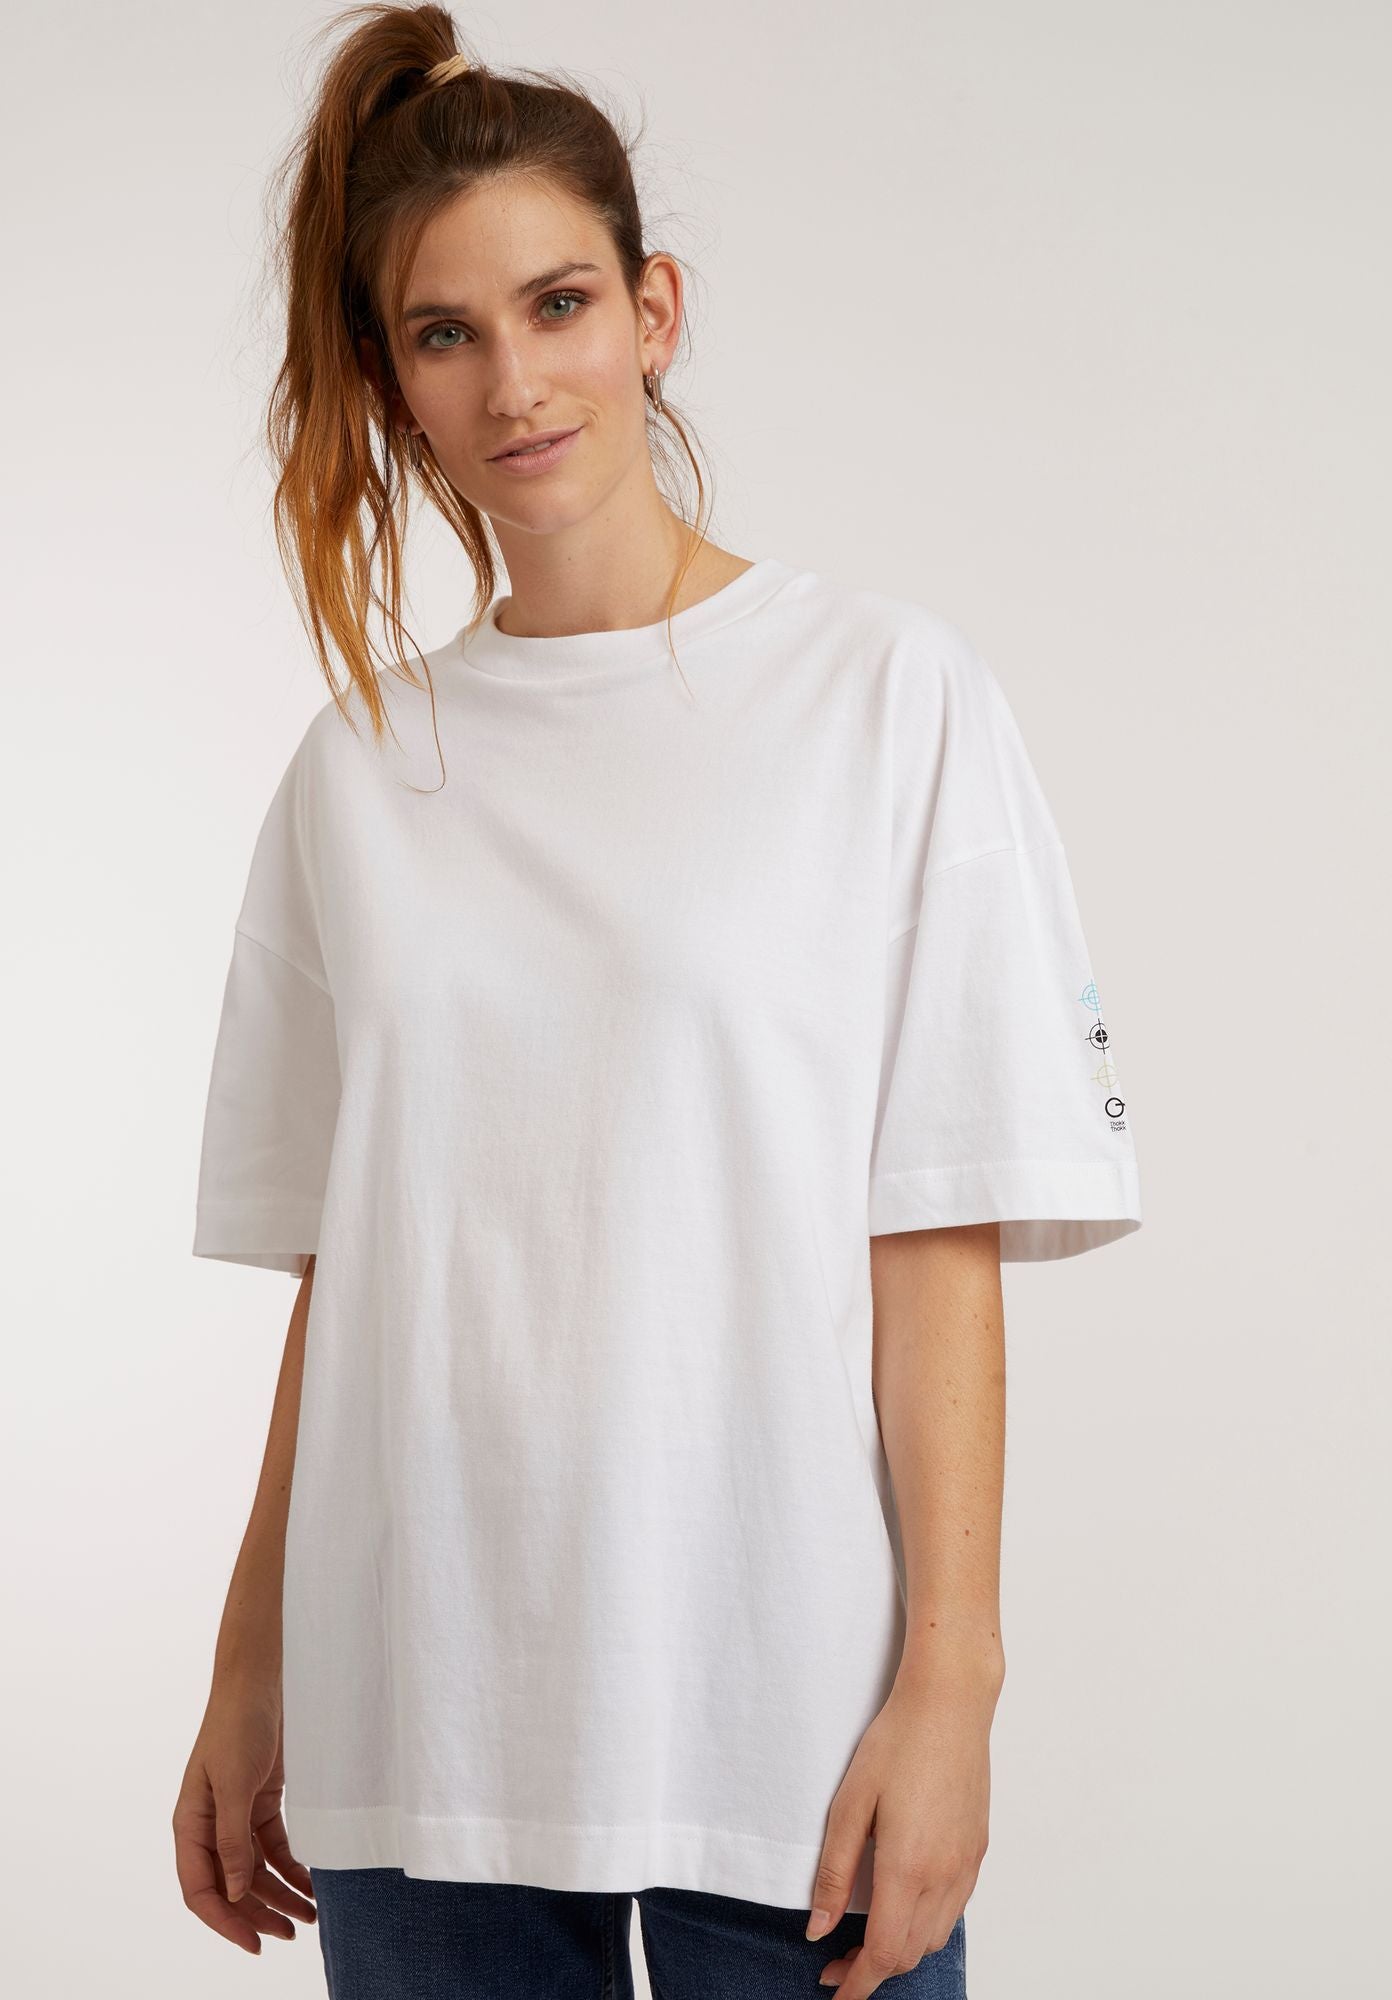 Big shirt unisex in white with back print by ThokkThokk (S)